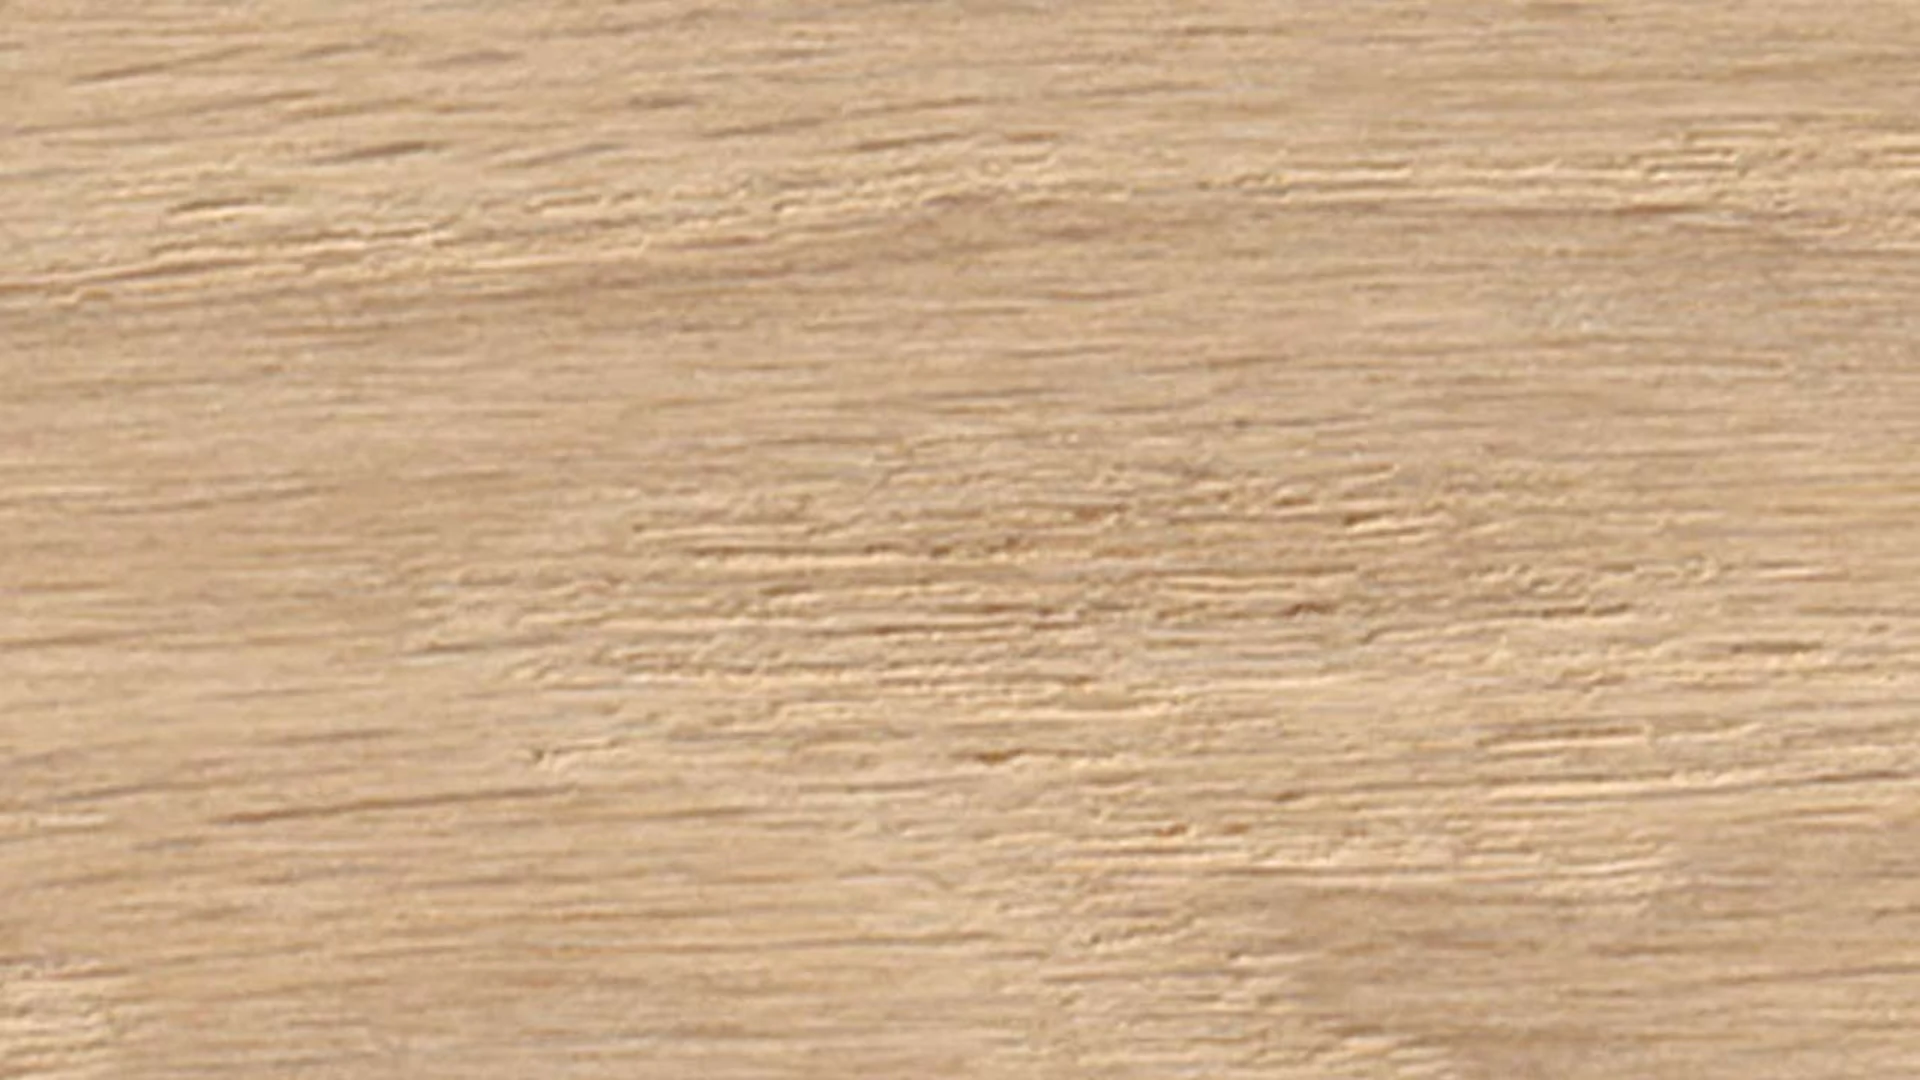 Haro Parquet Flooring - Series 4000 NF Stab Allegro naturaDur Oak light white Naturale (543493)